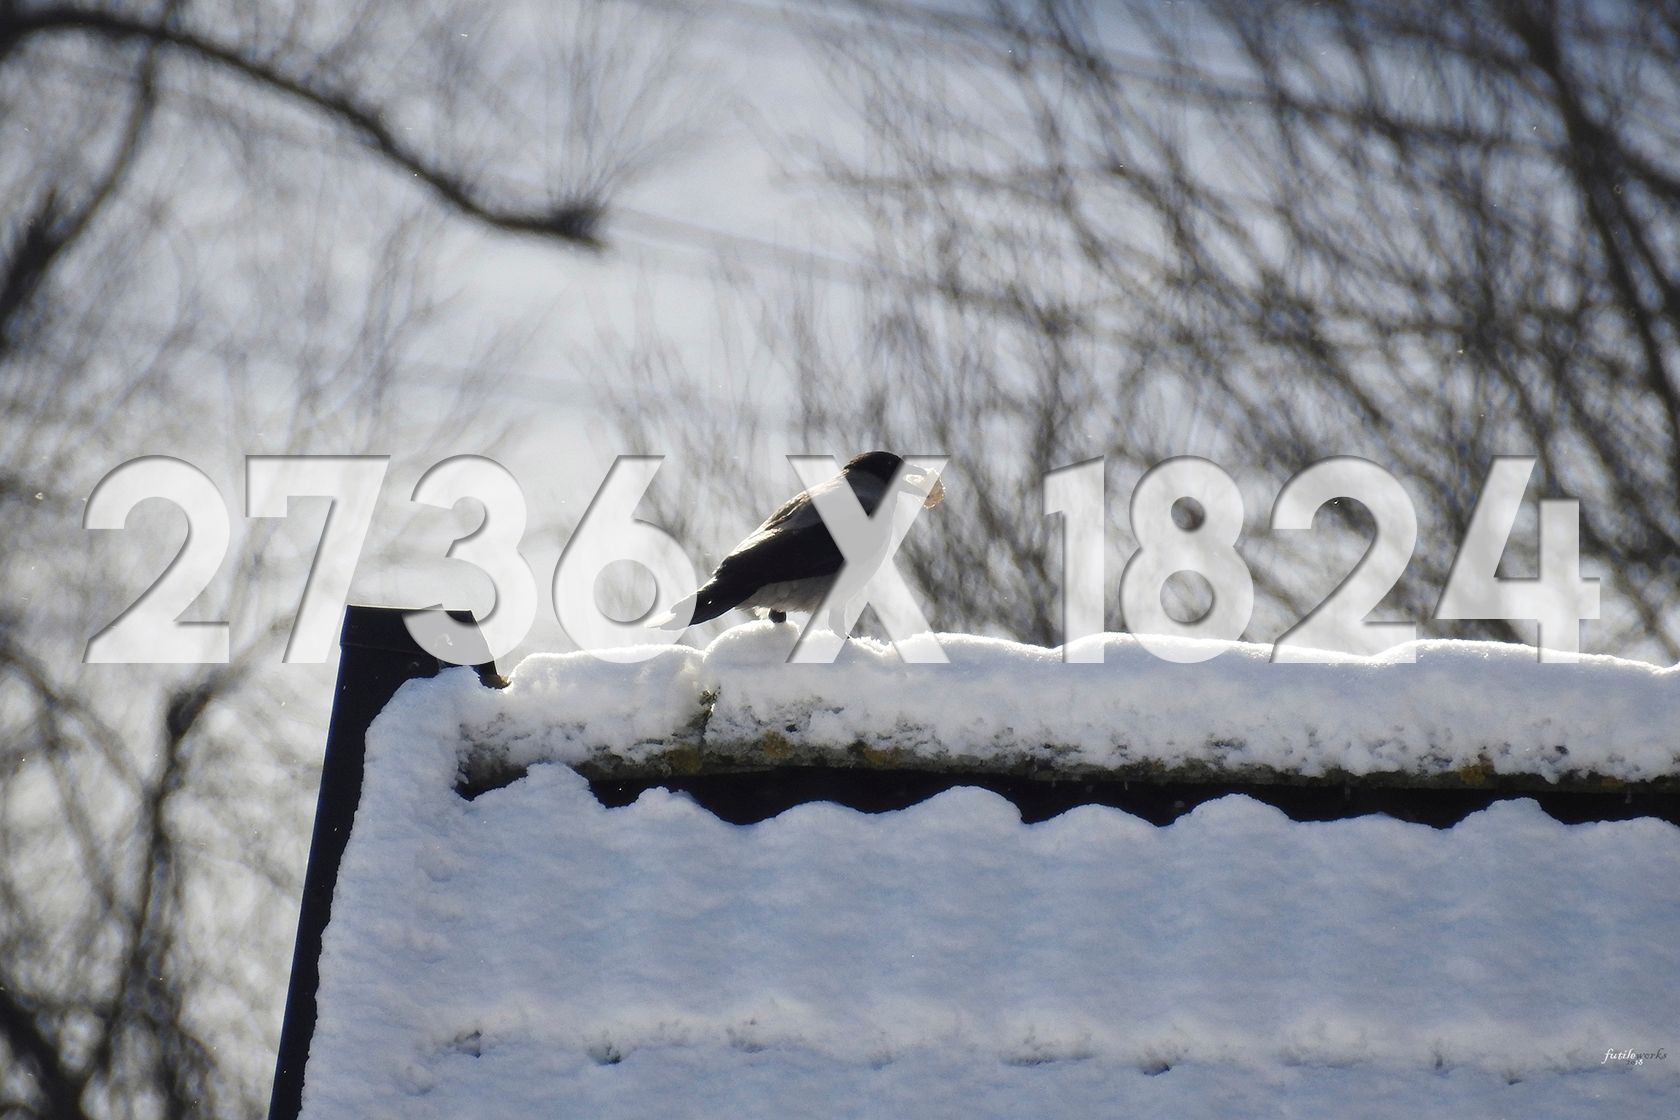 2736x1824 Thumb Winter Crow.jpg